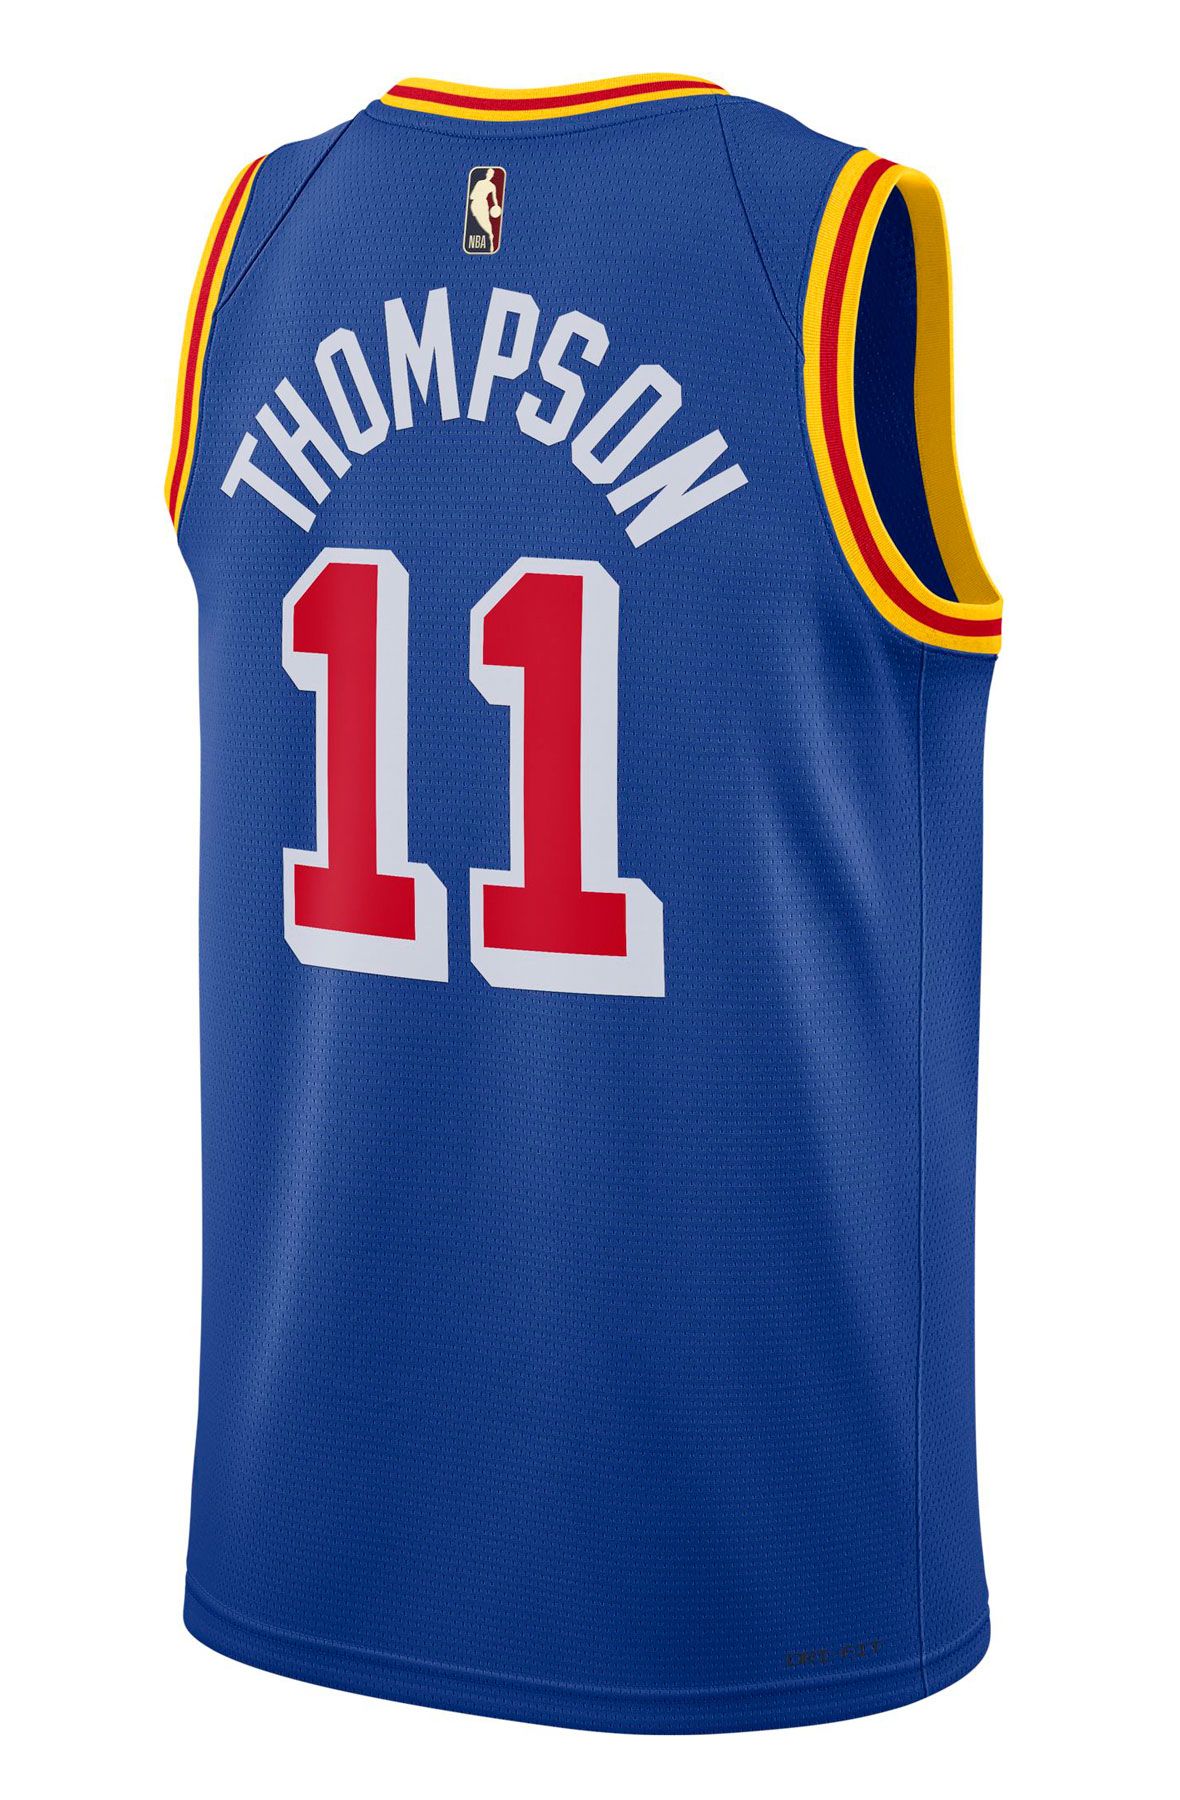 Nike Men's Golden State Warriors Klay Thompson #11 Blue Dri-Fit Swingman Jersey, XXL